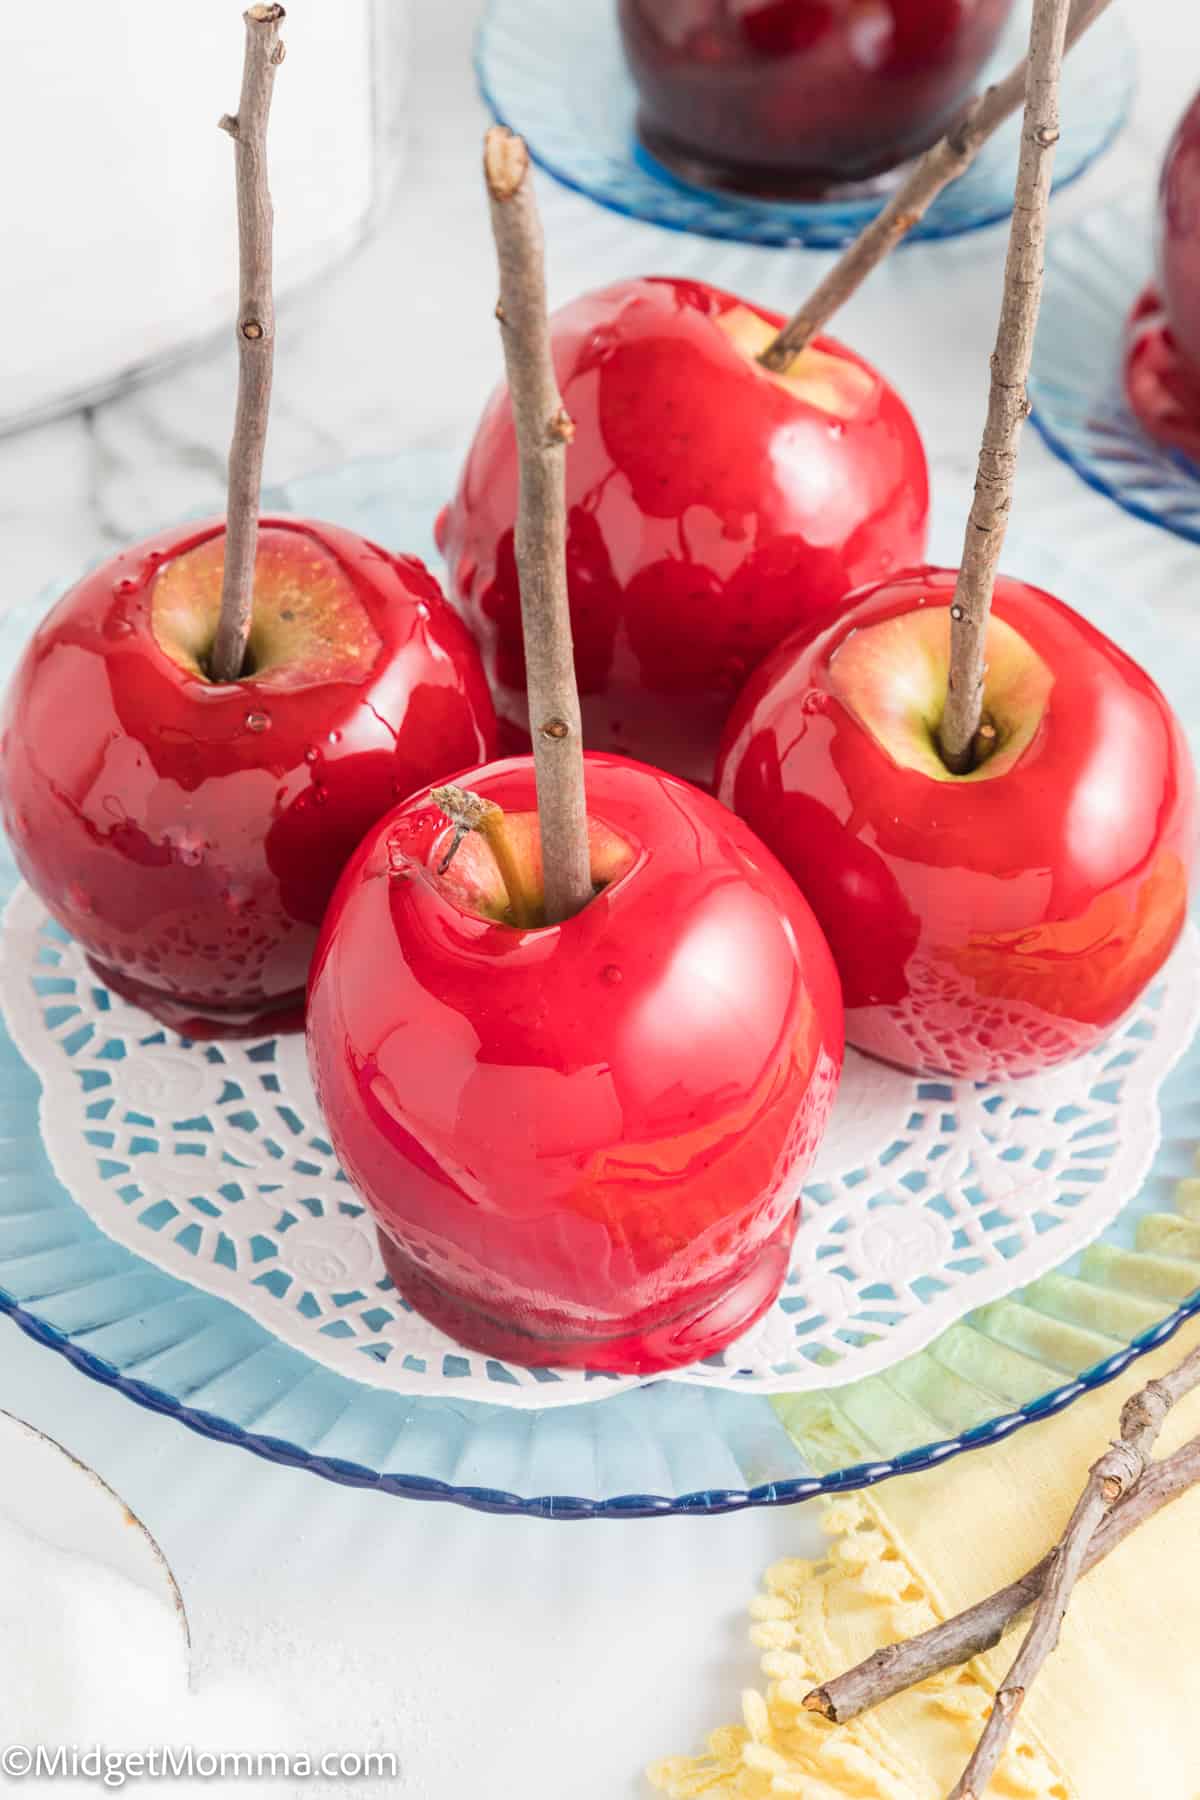 https://www.midgetmomma.com/wp-content/uploads/2013/09/Candied-Apples-recipe-13.jpg